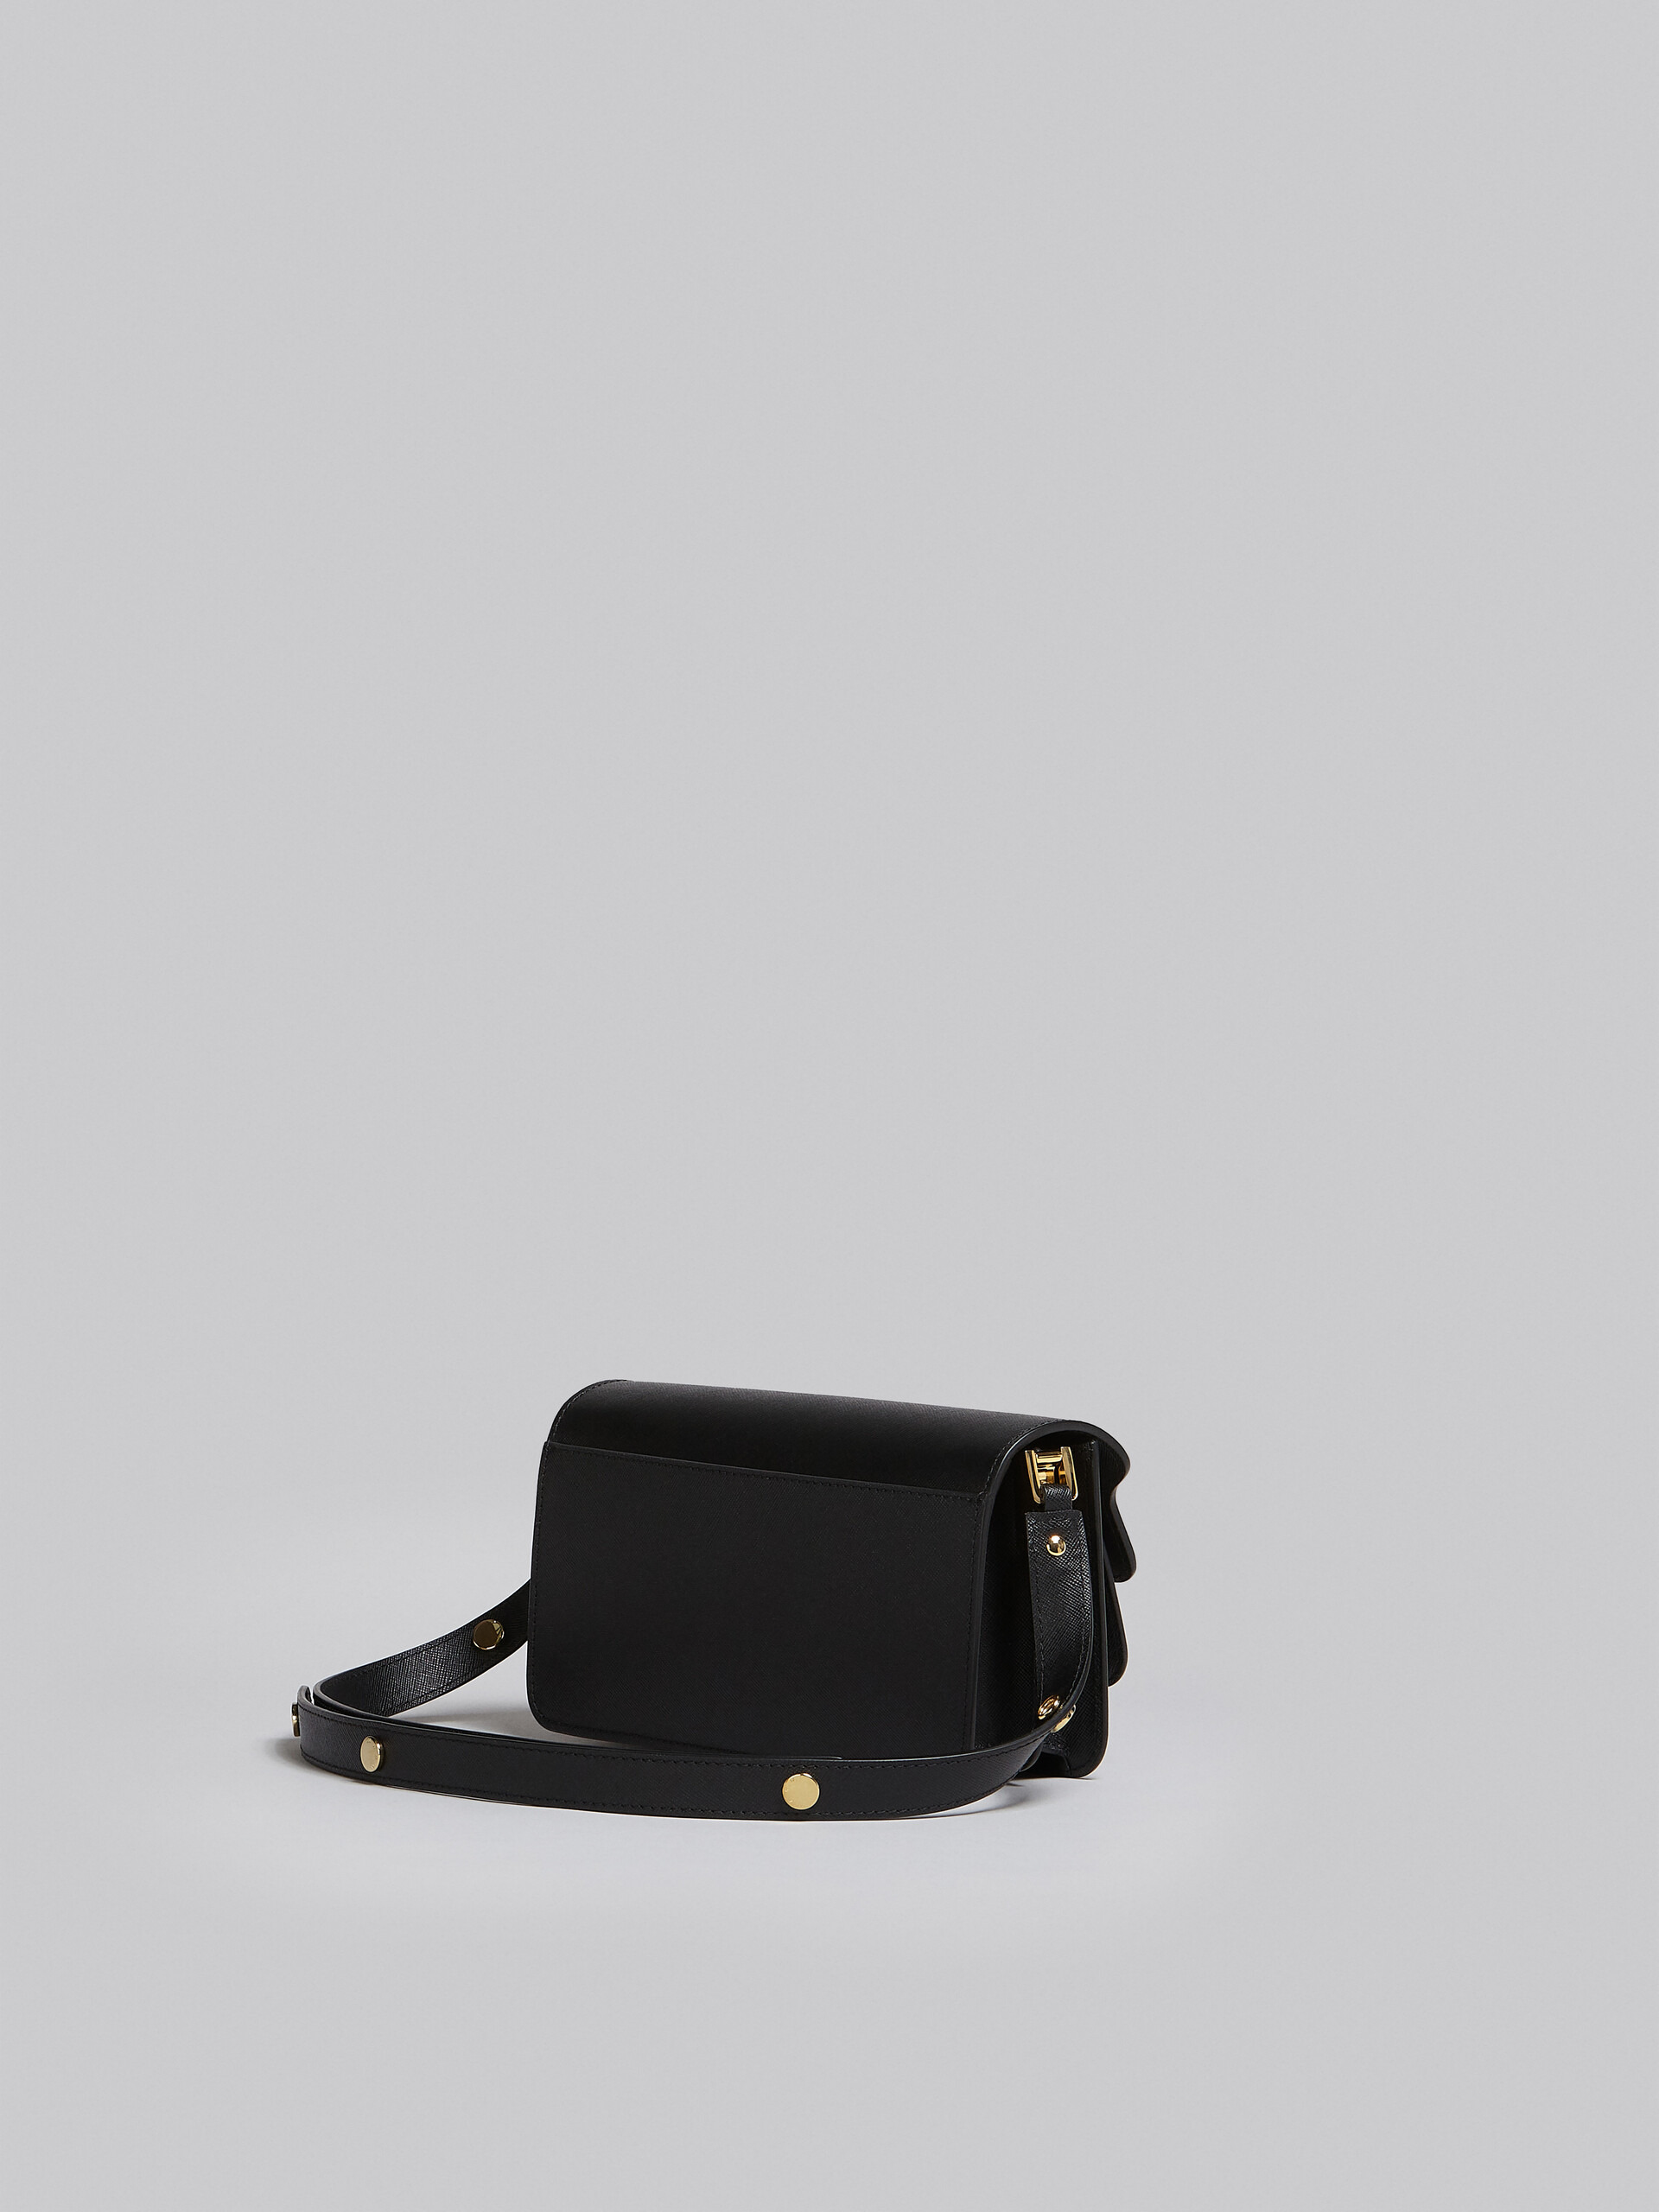 Trunk Bag E/W in white saffiano leather - Shoulder Bag - Image 3